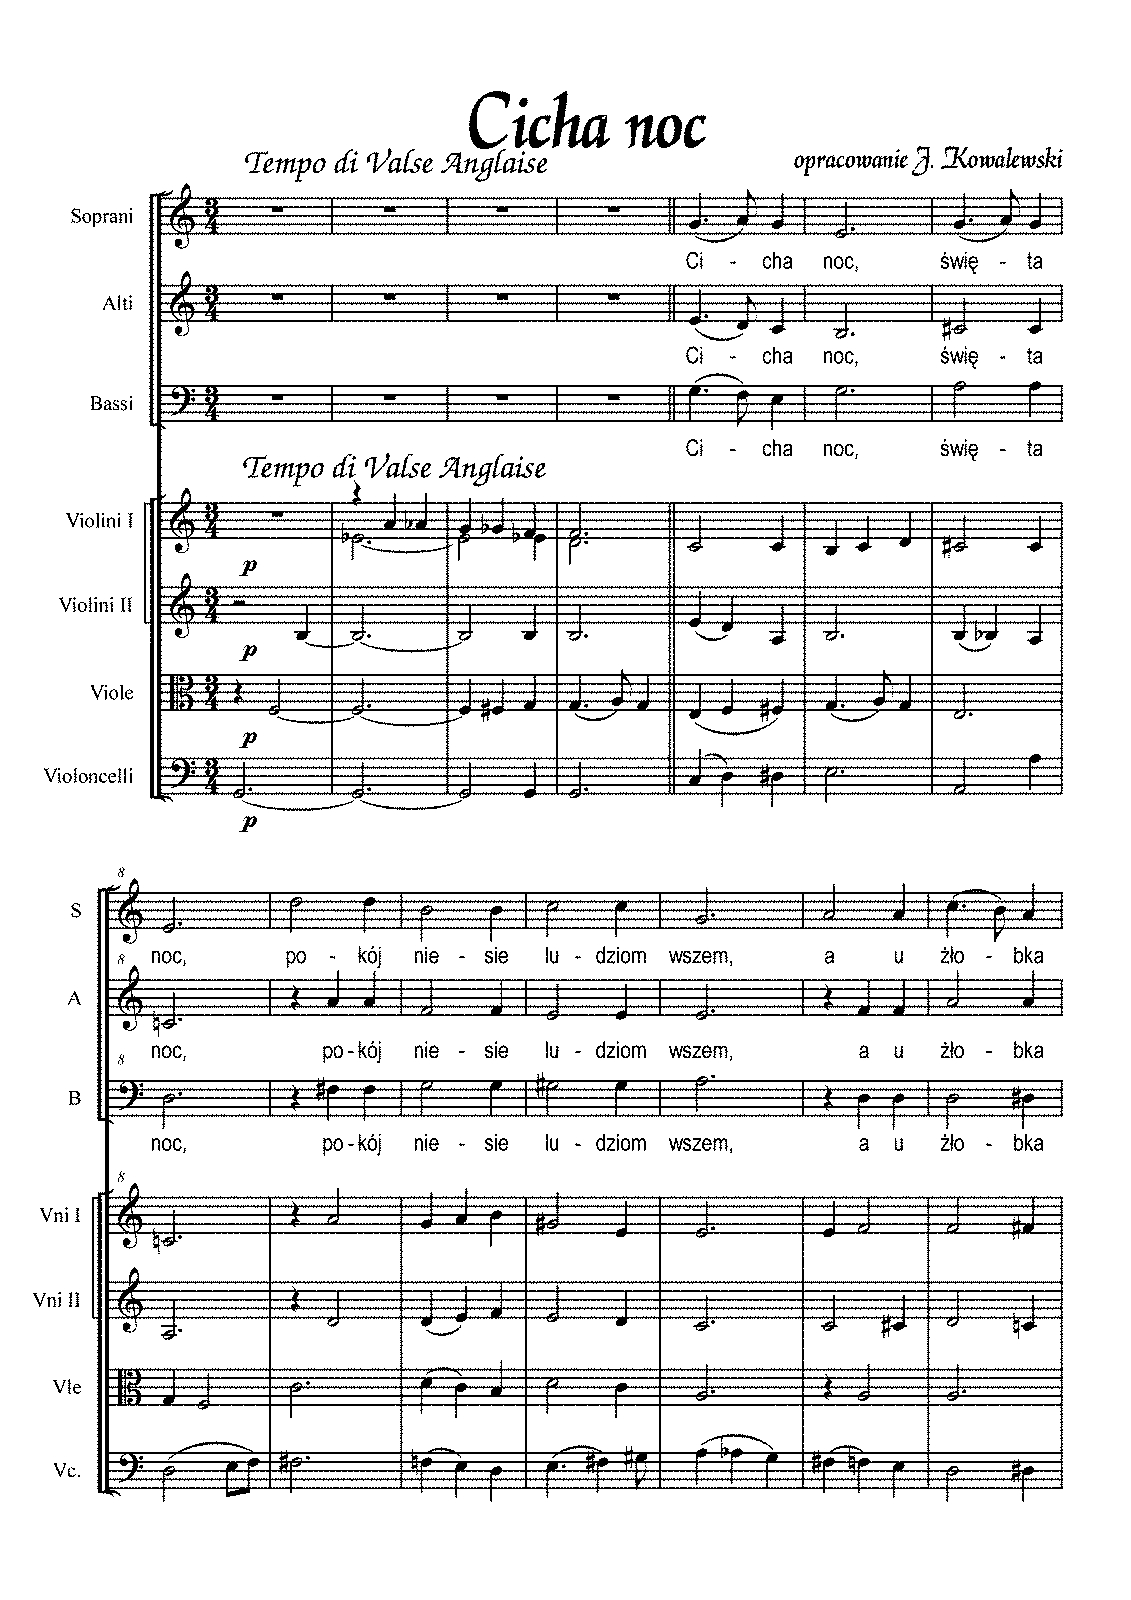 Stille Nacht, Heilige Nacht, H.145 (Gruber, Franz Xaver) - Imslp - Free Printable Sheet Music For Voice And Piano